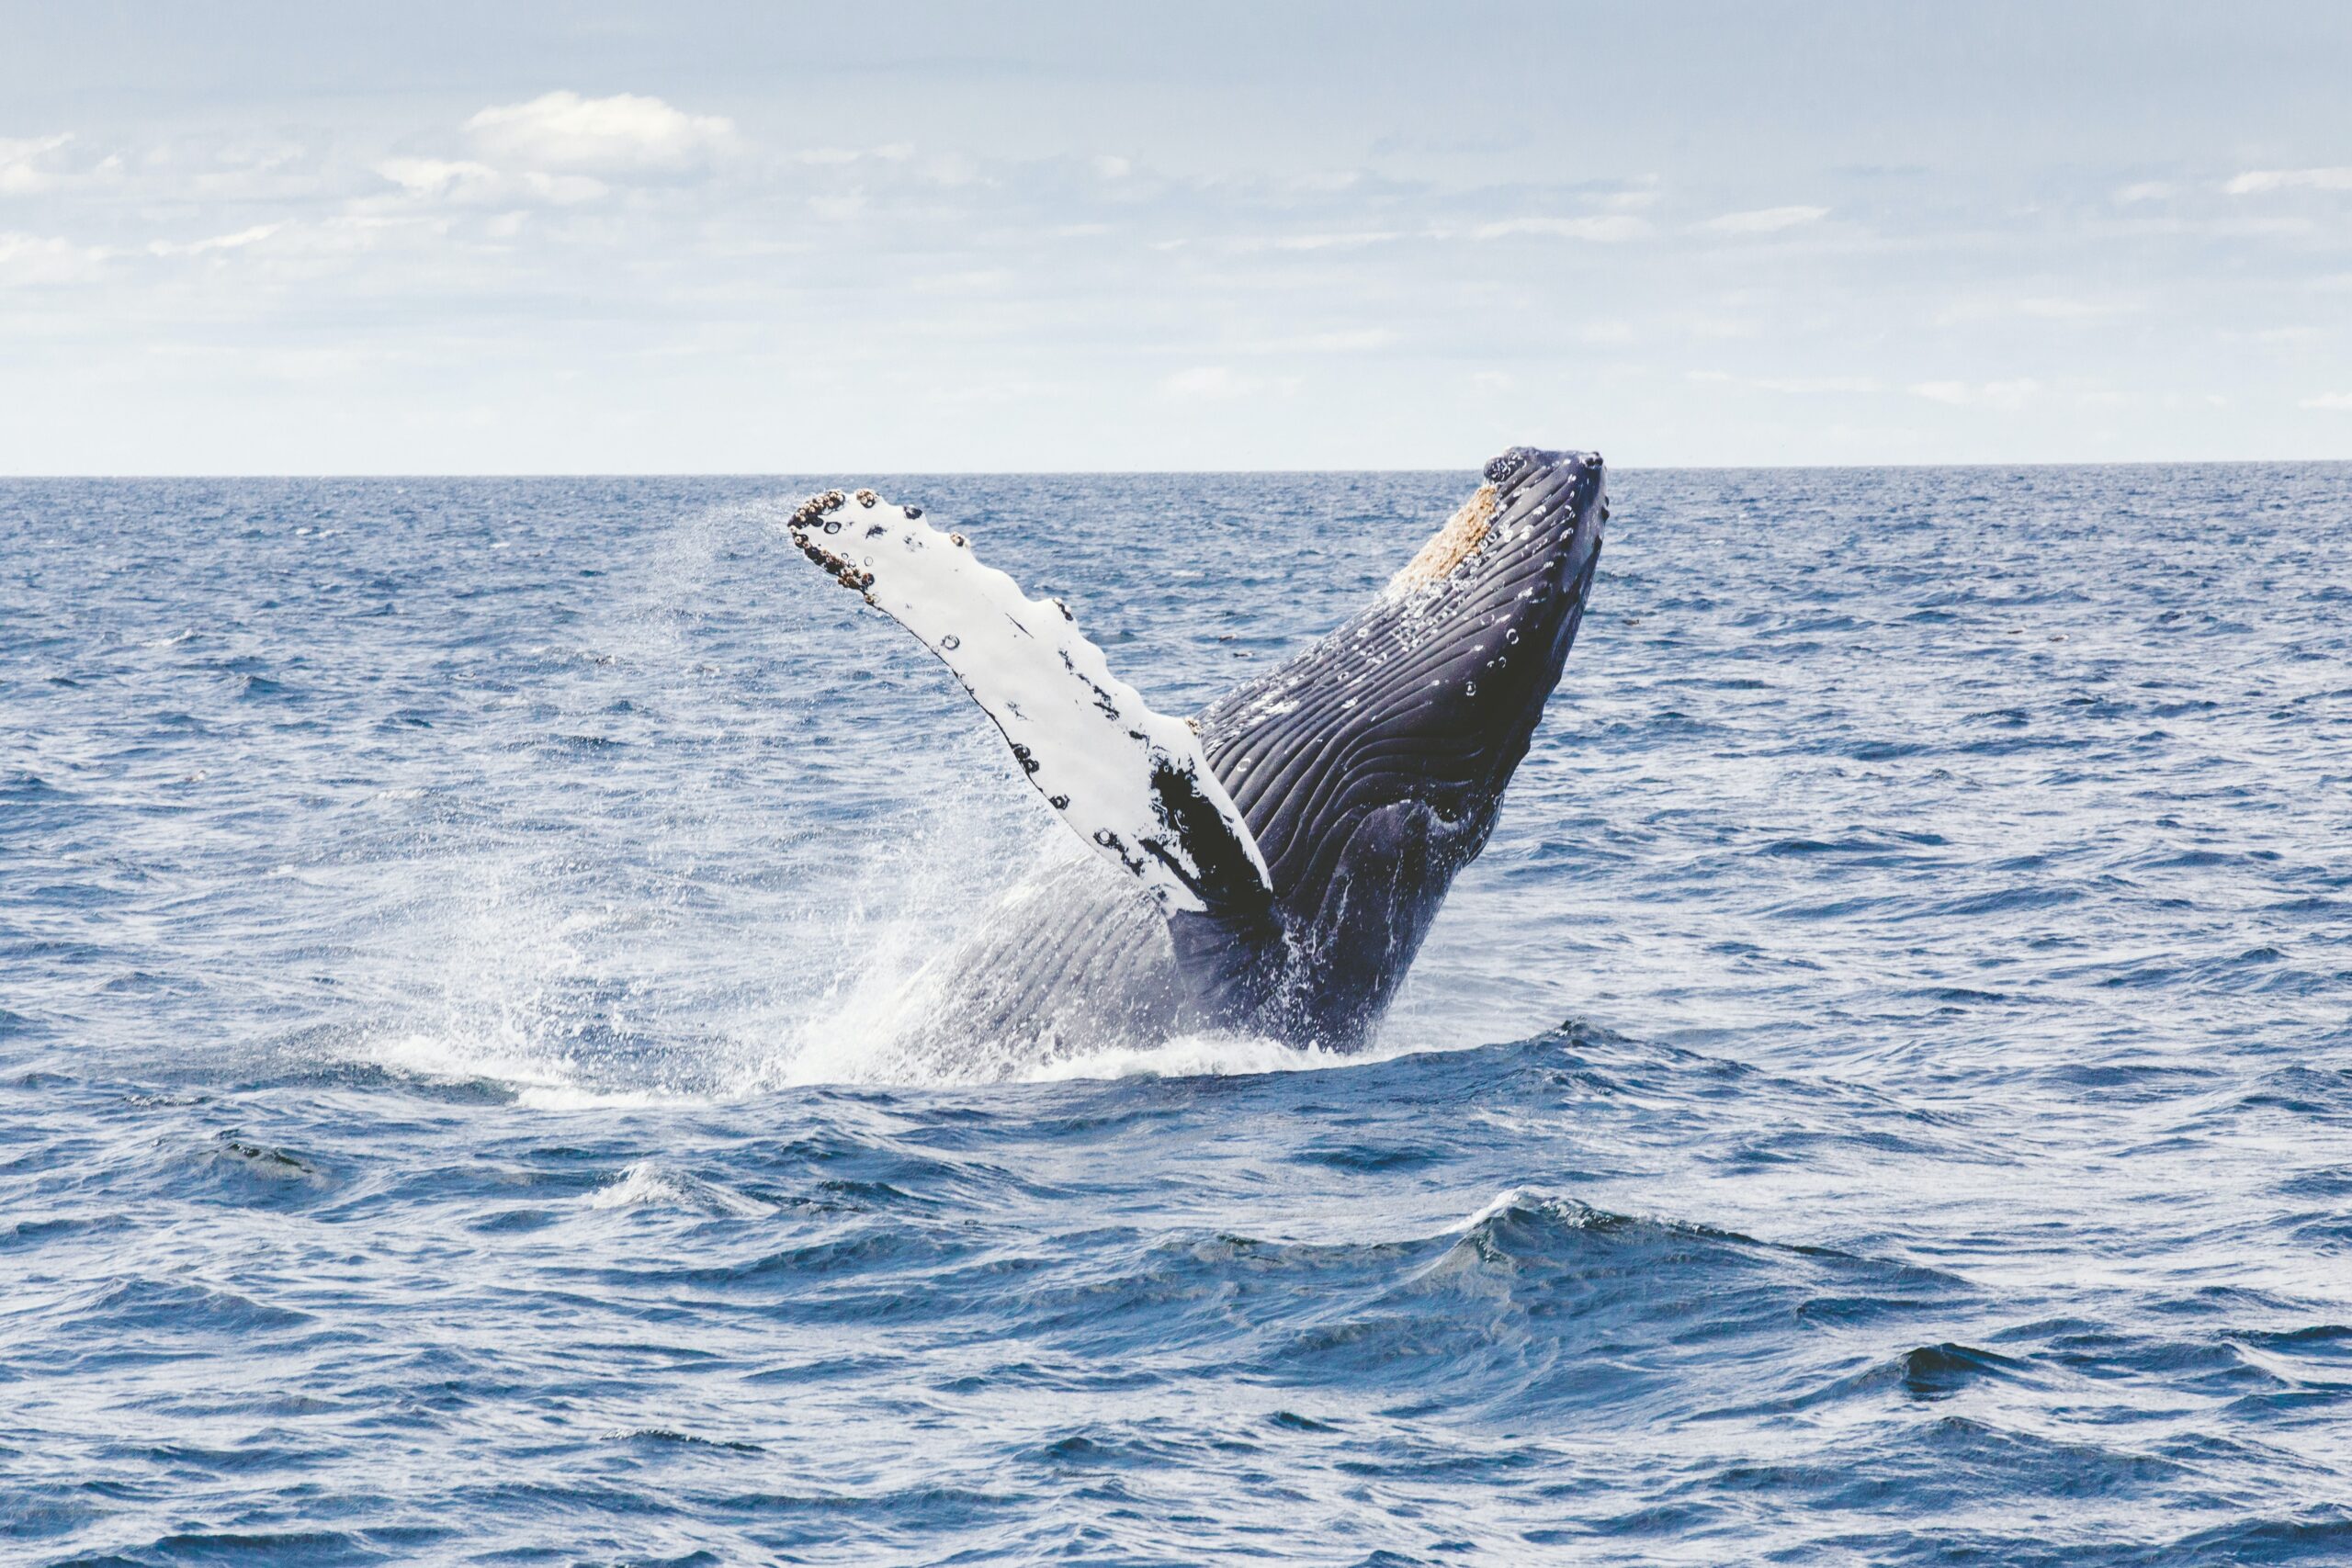 Whale breaching water near Ptown (Photo Credit: Thomas Kelley on Unsplash)